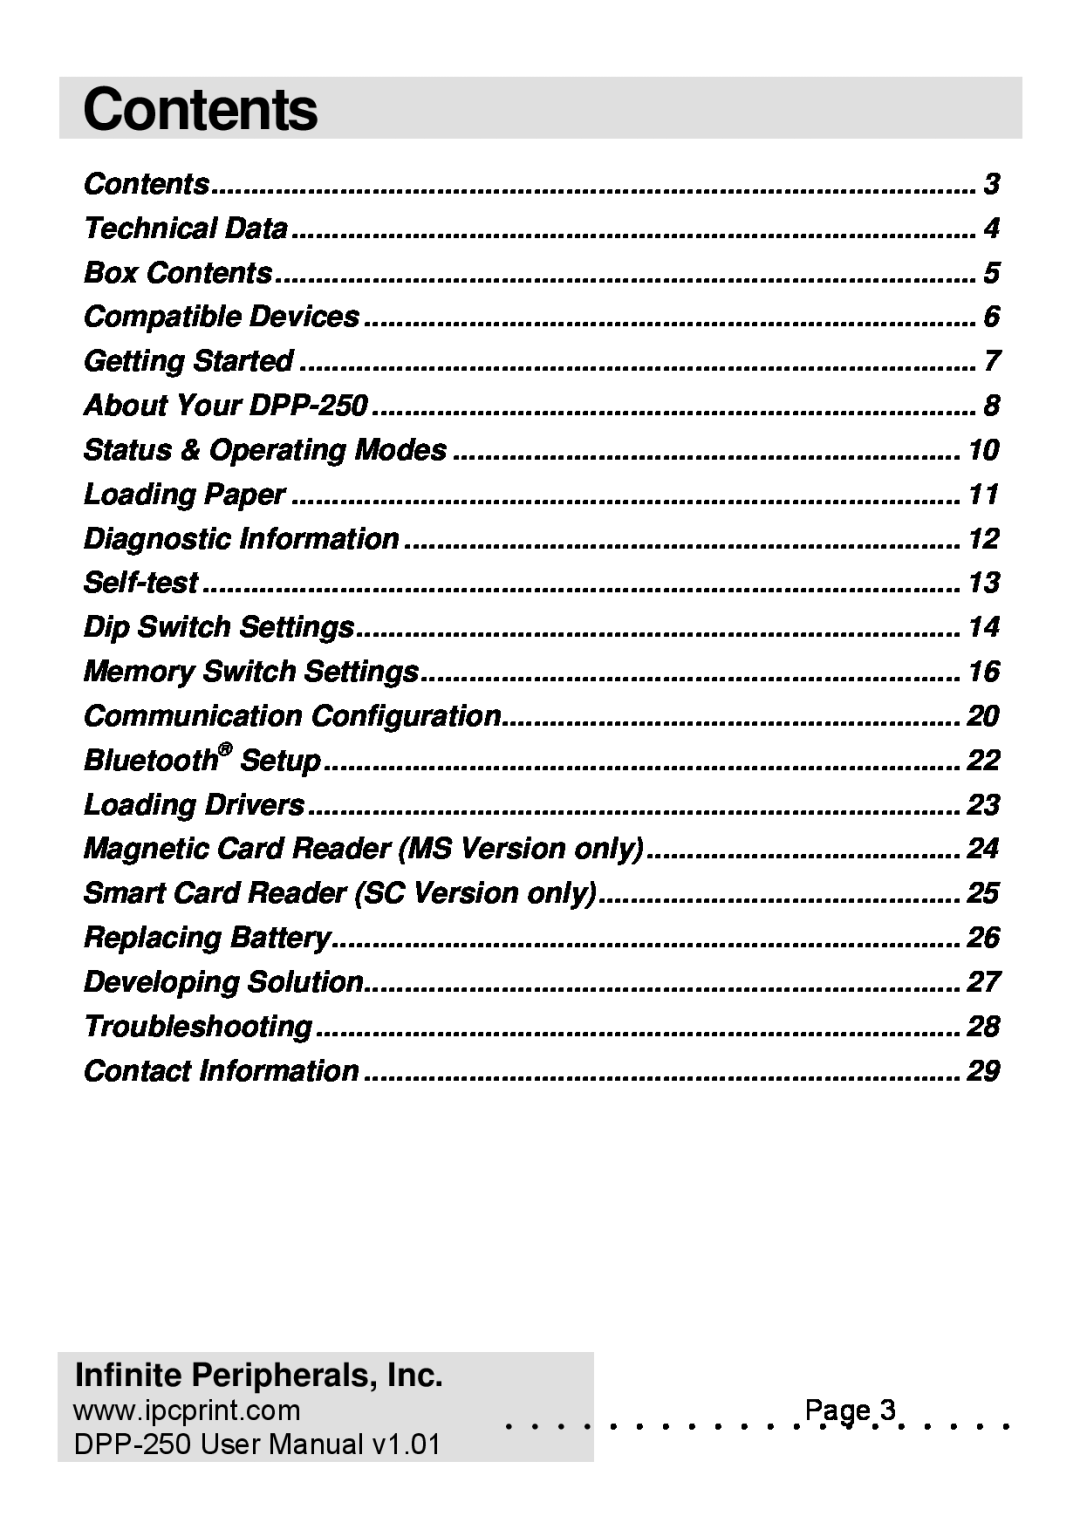 Infinite Peripherals user manual Contents, Infinite Peripherals, Inc, DPP-250 User Manual 